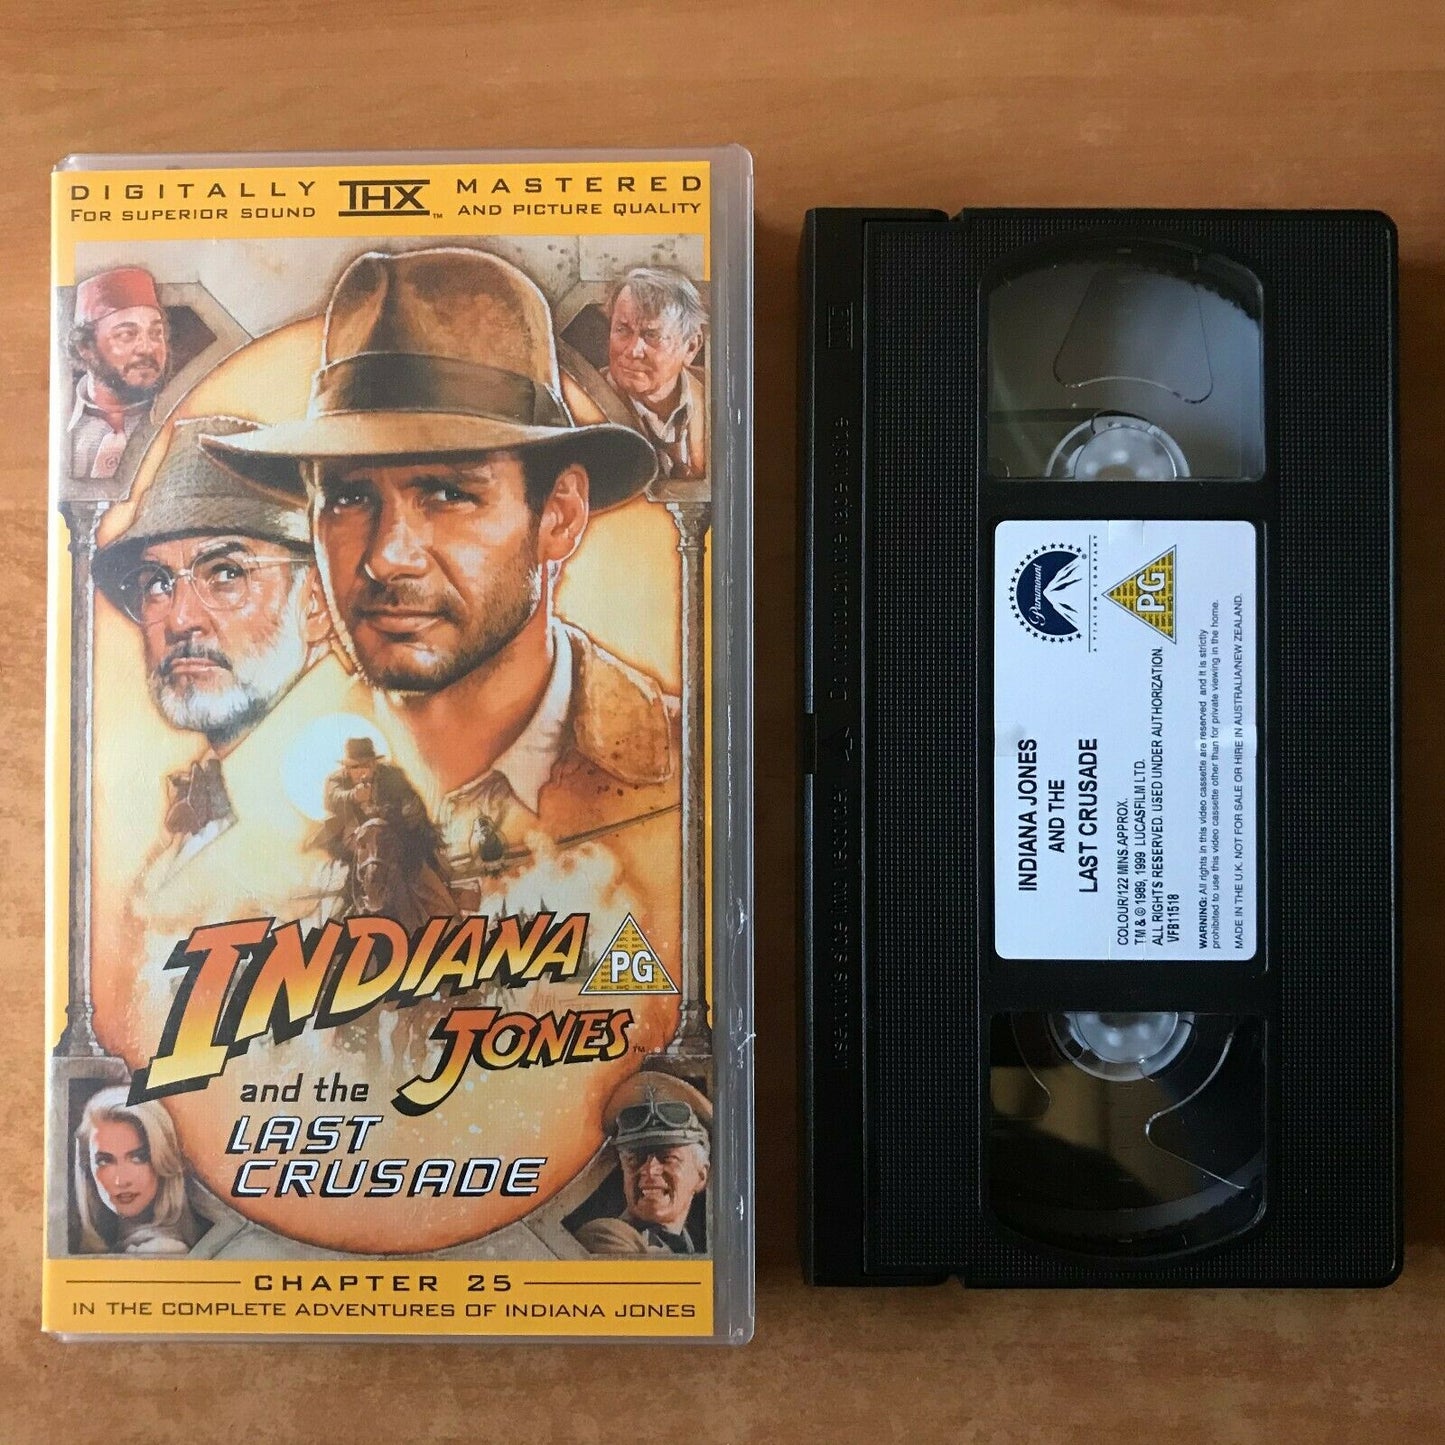 Indiana Jones [Last Crusade] THX Mastered - Harrison Ford / Sean Connery - VHS-